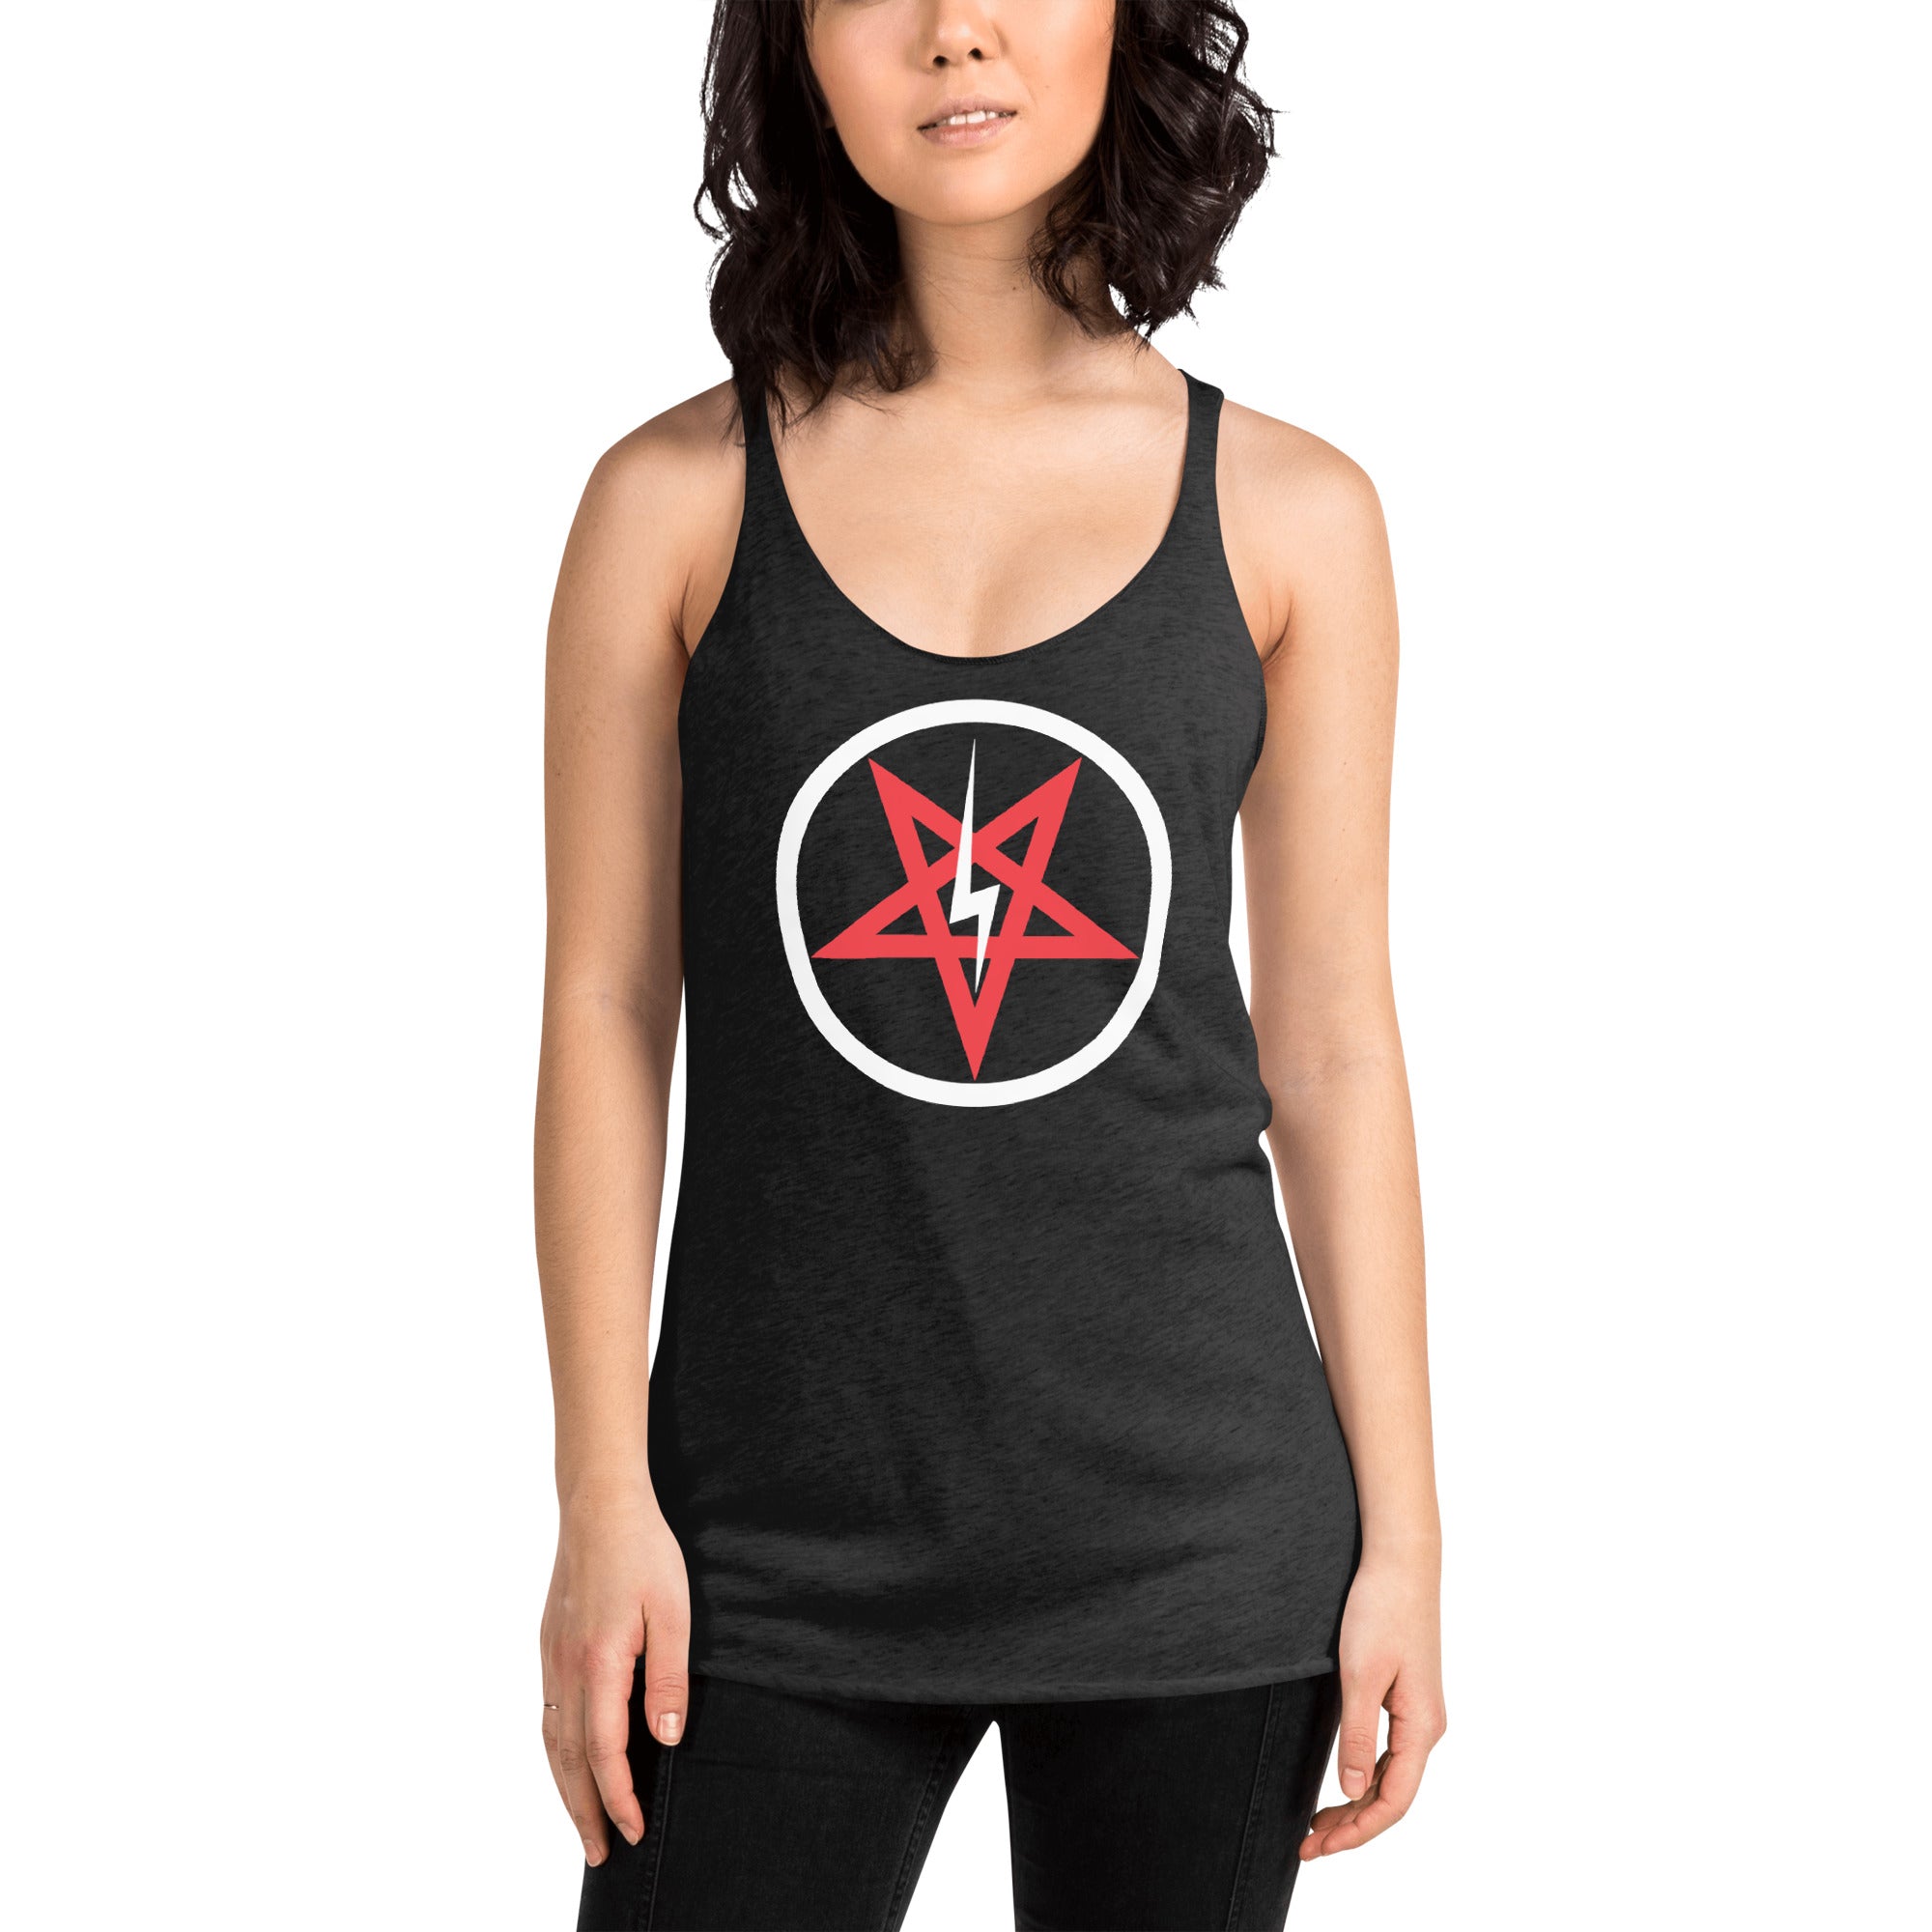 Satanic Church Sigil Bolt Inverted Pentagram Women's Racerback Tank Top Shirt